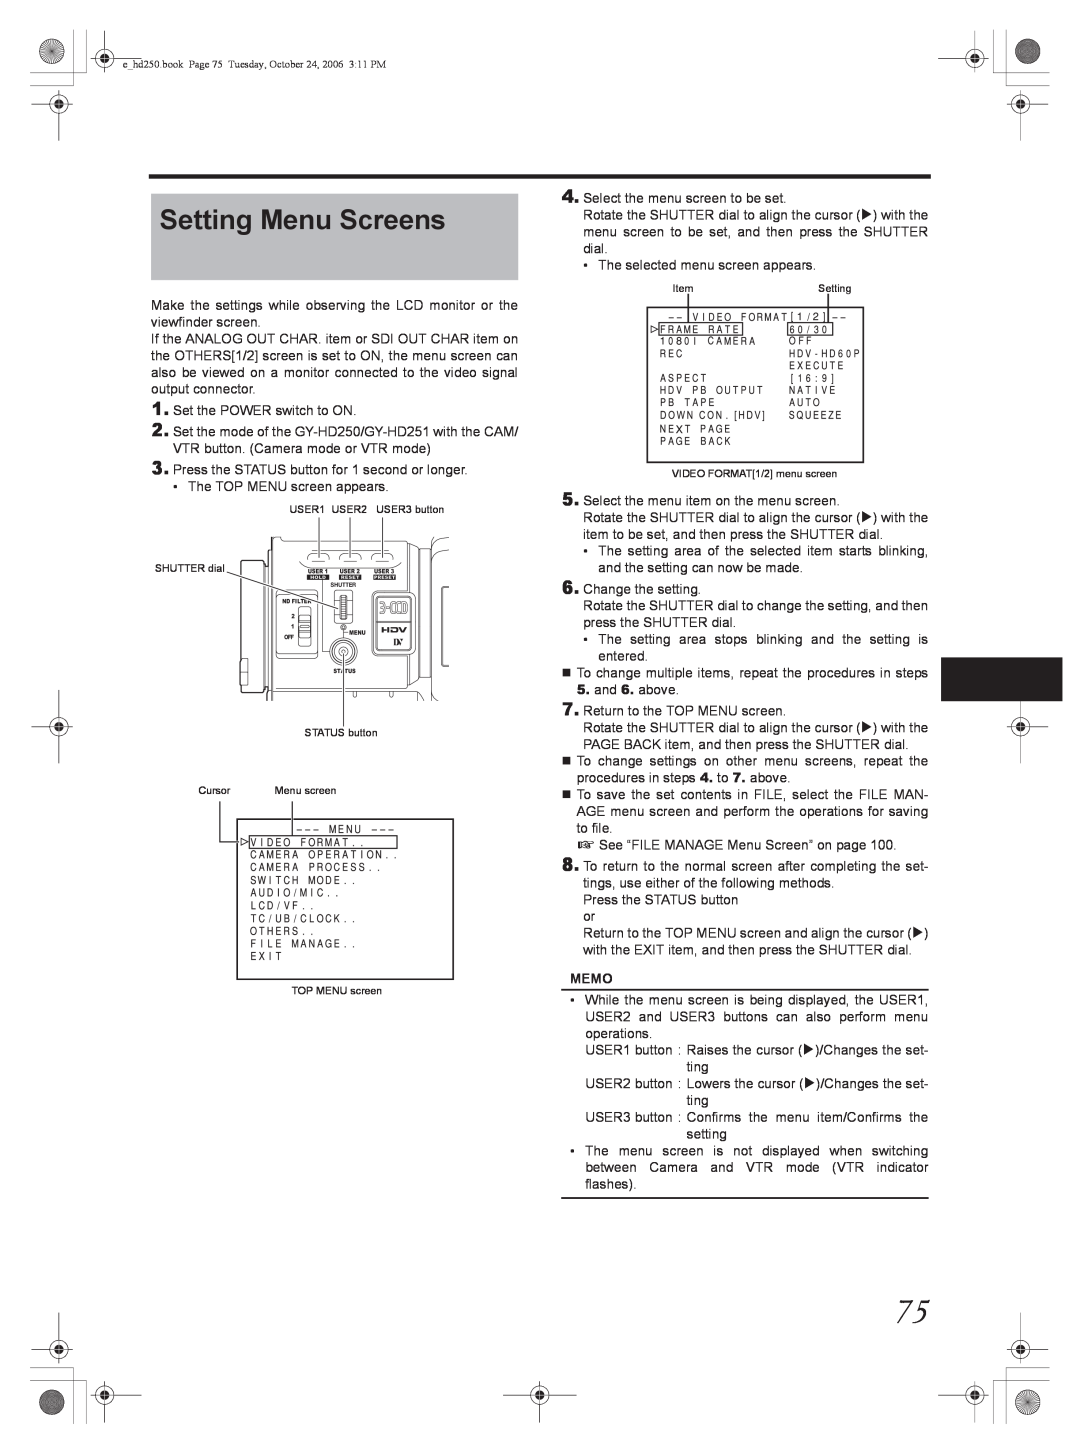 JVC GY-HD251, GY-HD250 manual Setting Menu Screens, Memo, ehd250.book Page 75 Tuesday, October 24, 2006 311 PM 